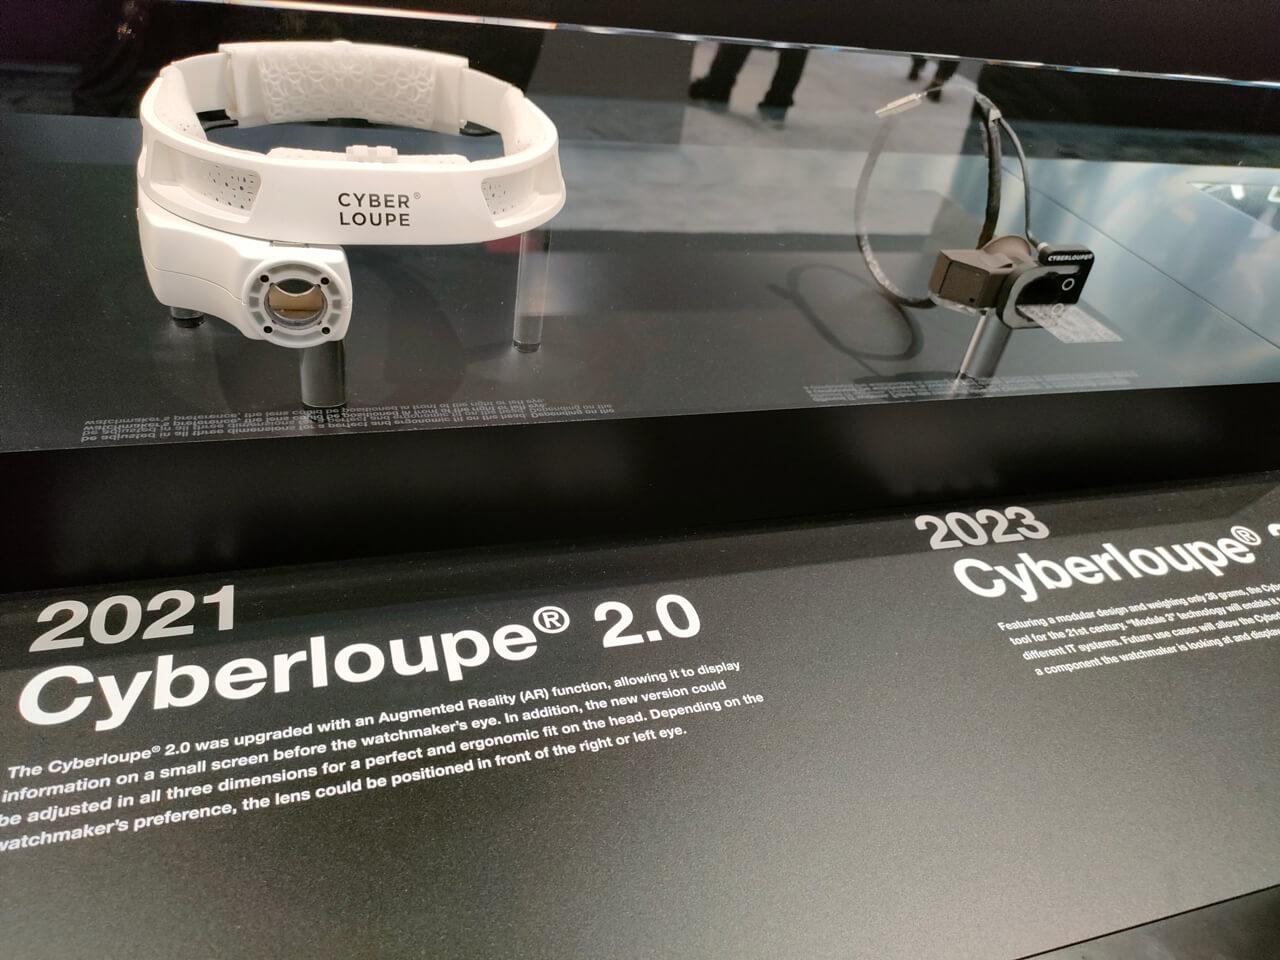 「Cyberloupe®」は高解像度カメラとネットワーク接続を備えた世界初のデジタル化された時計メーカーの拡大鏡